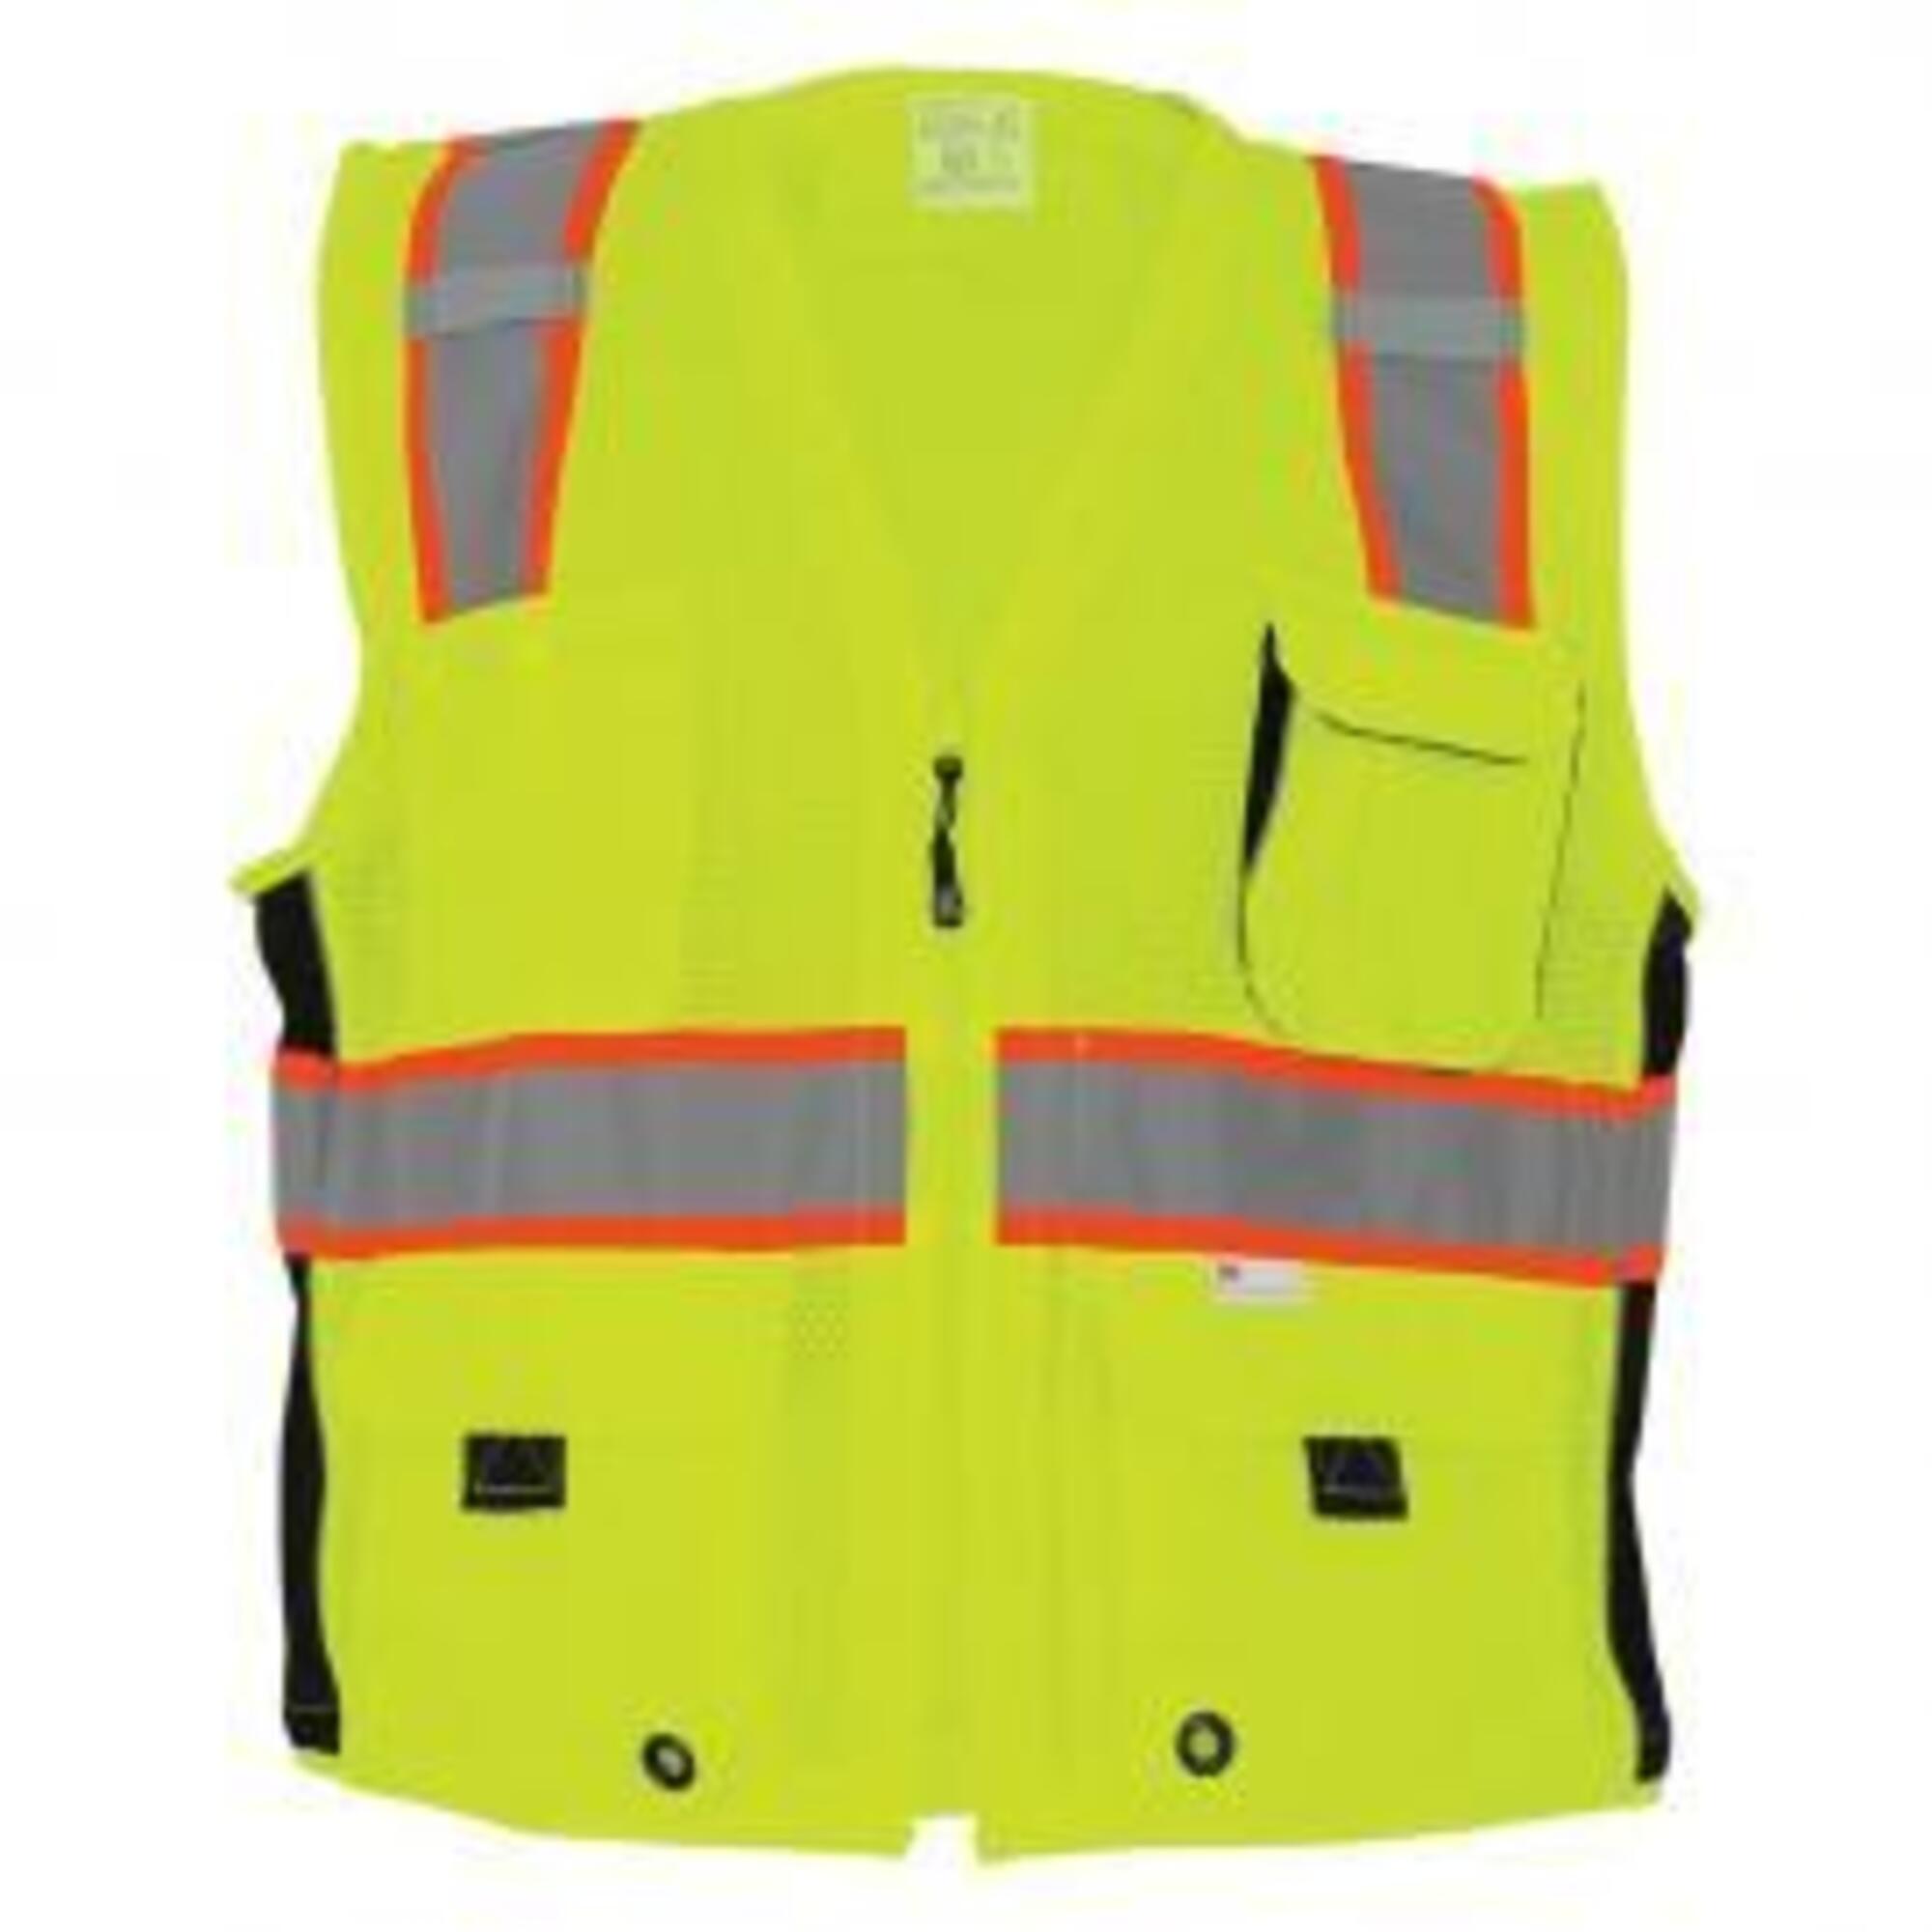 FrogWear Surveyors Safety Vest, 4XL, Yellow/Green, Model GLO-079-4XL